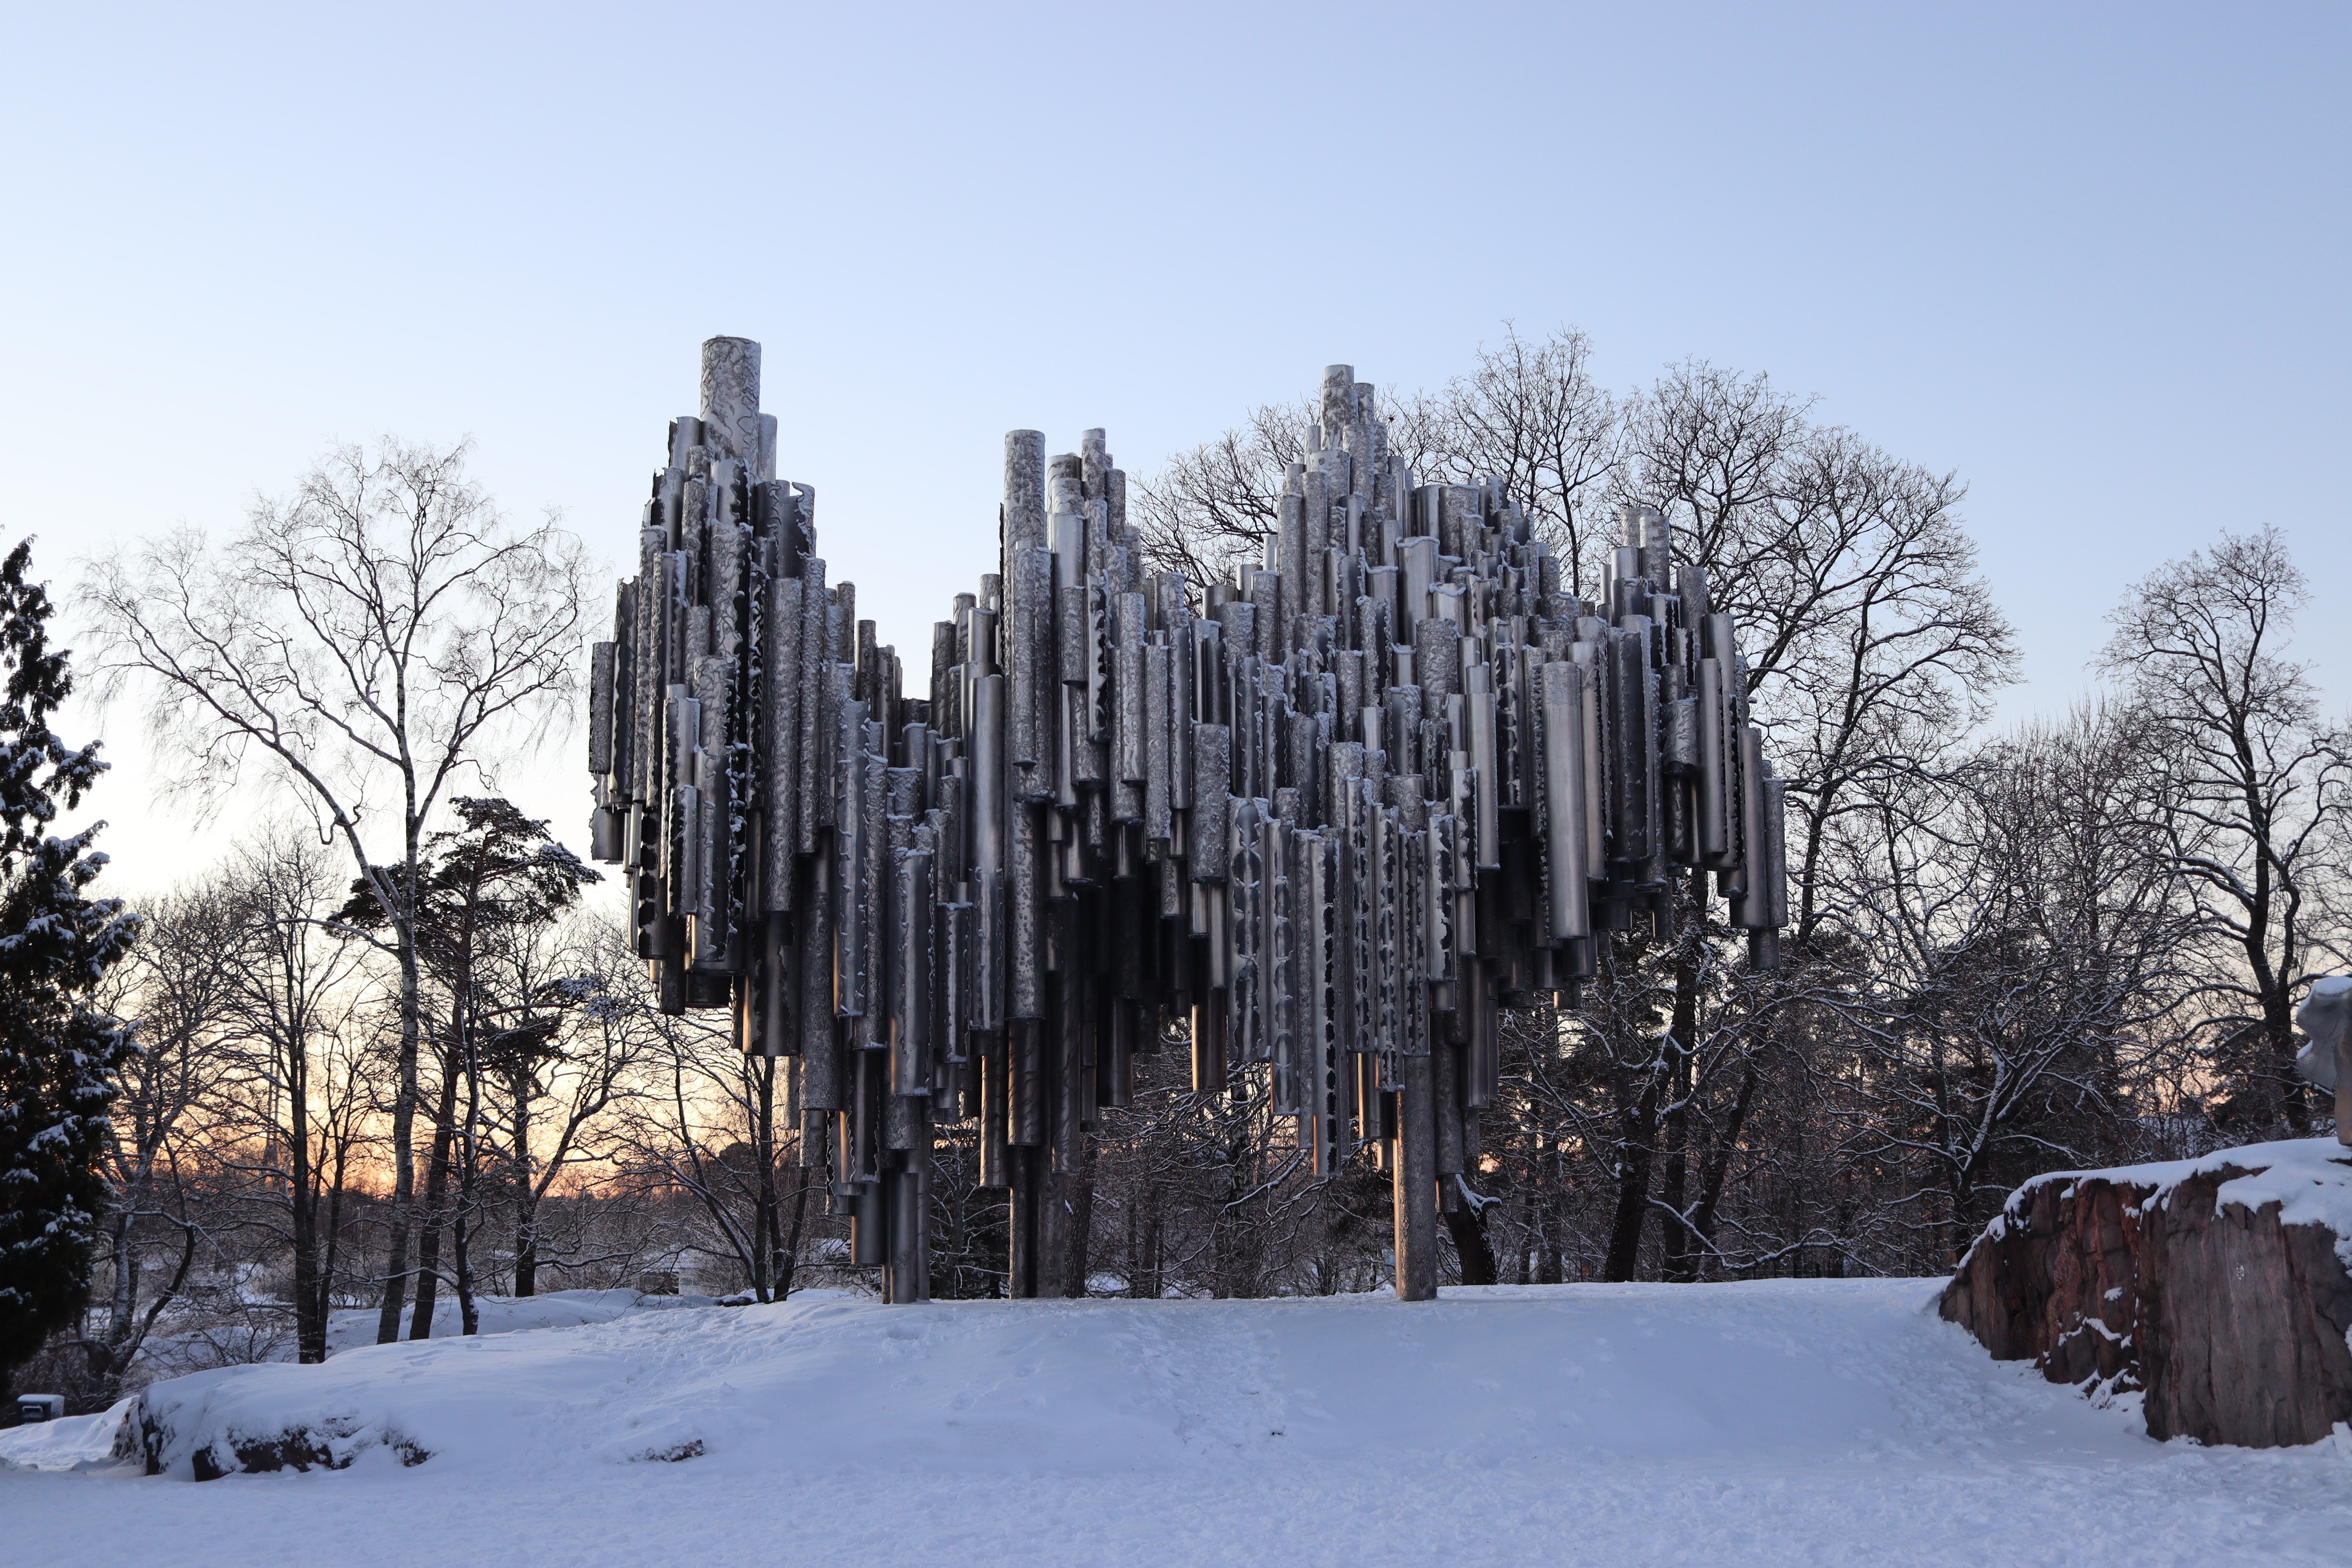 Monument en homenatge a Sibelius / Unsplash